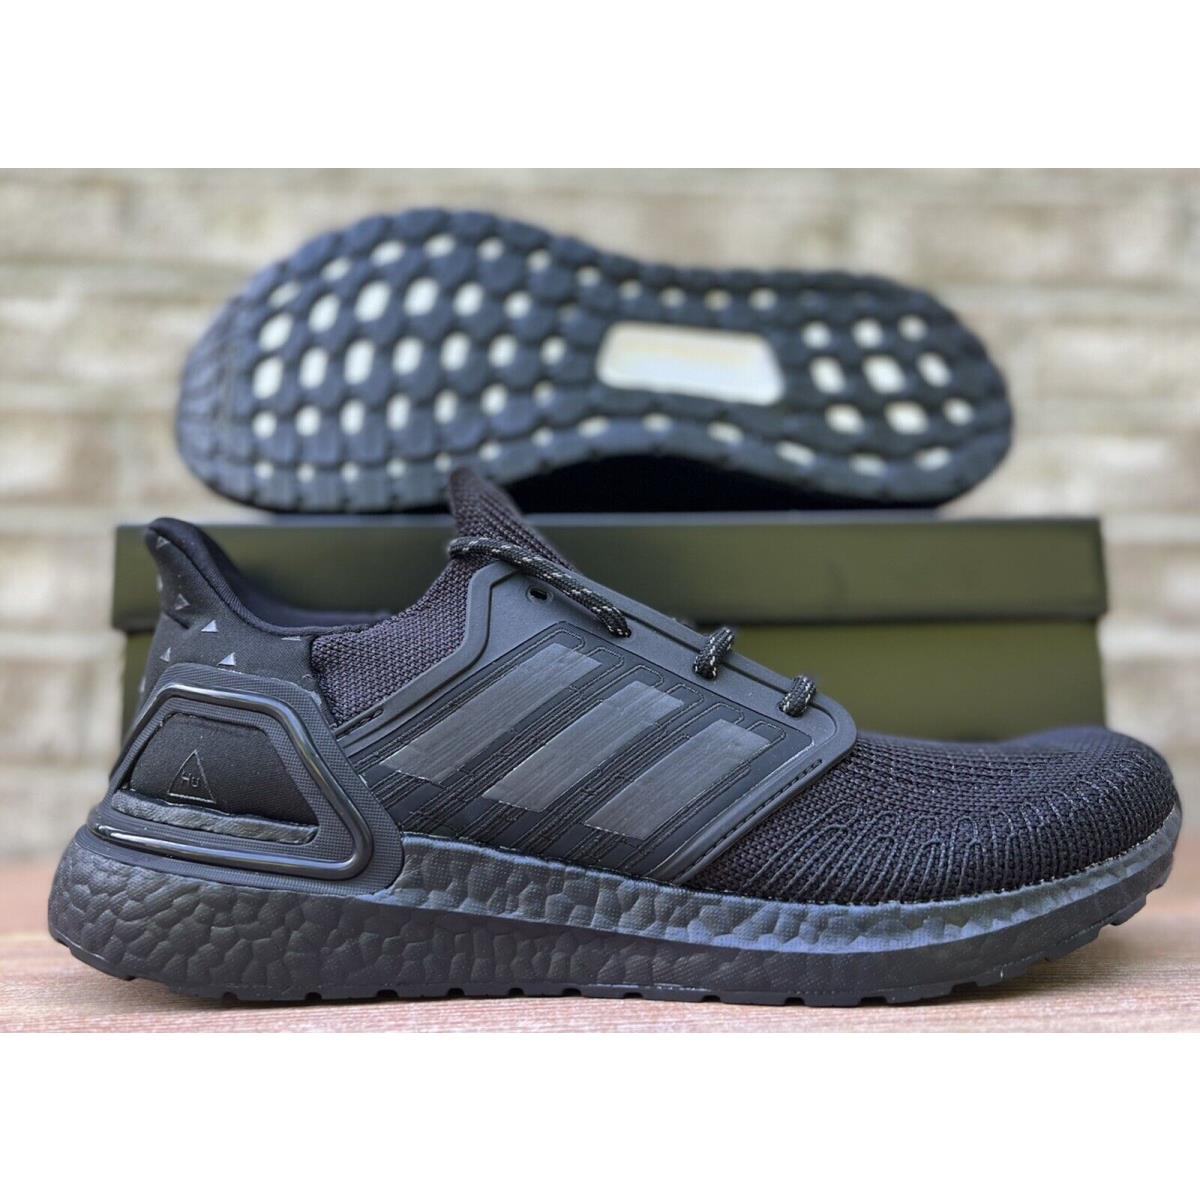 Adidas shoes UltraBoost - TRIPLE BLACK 1